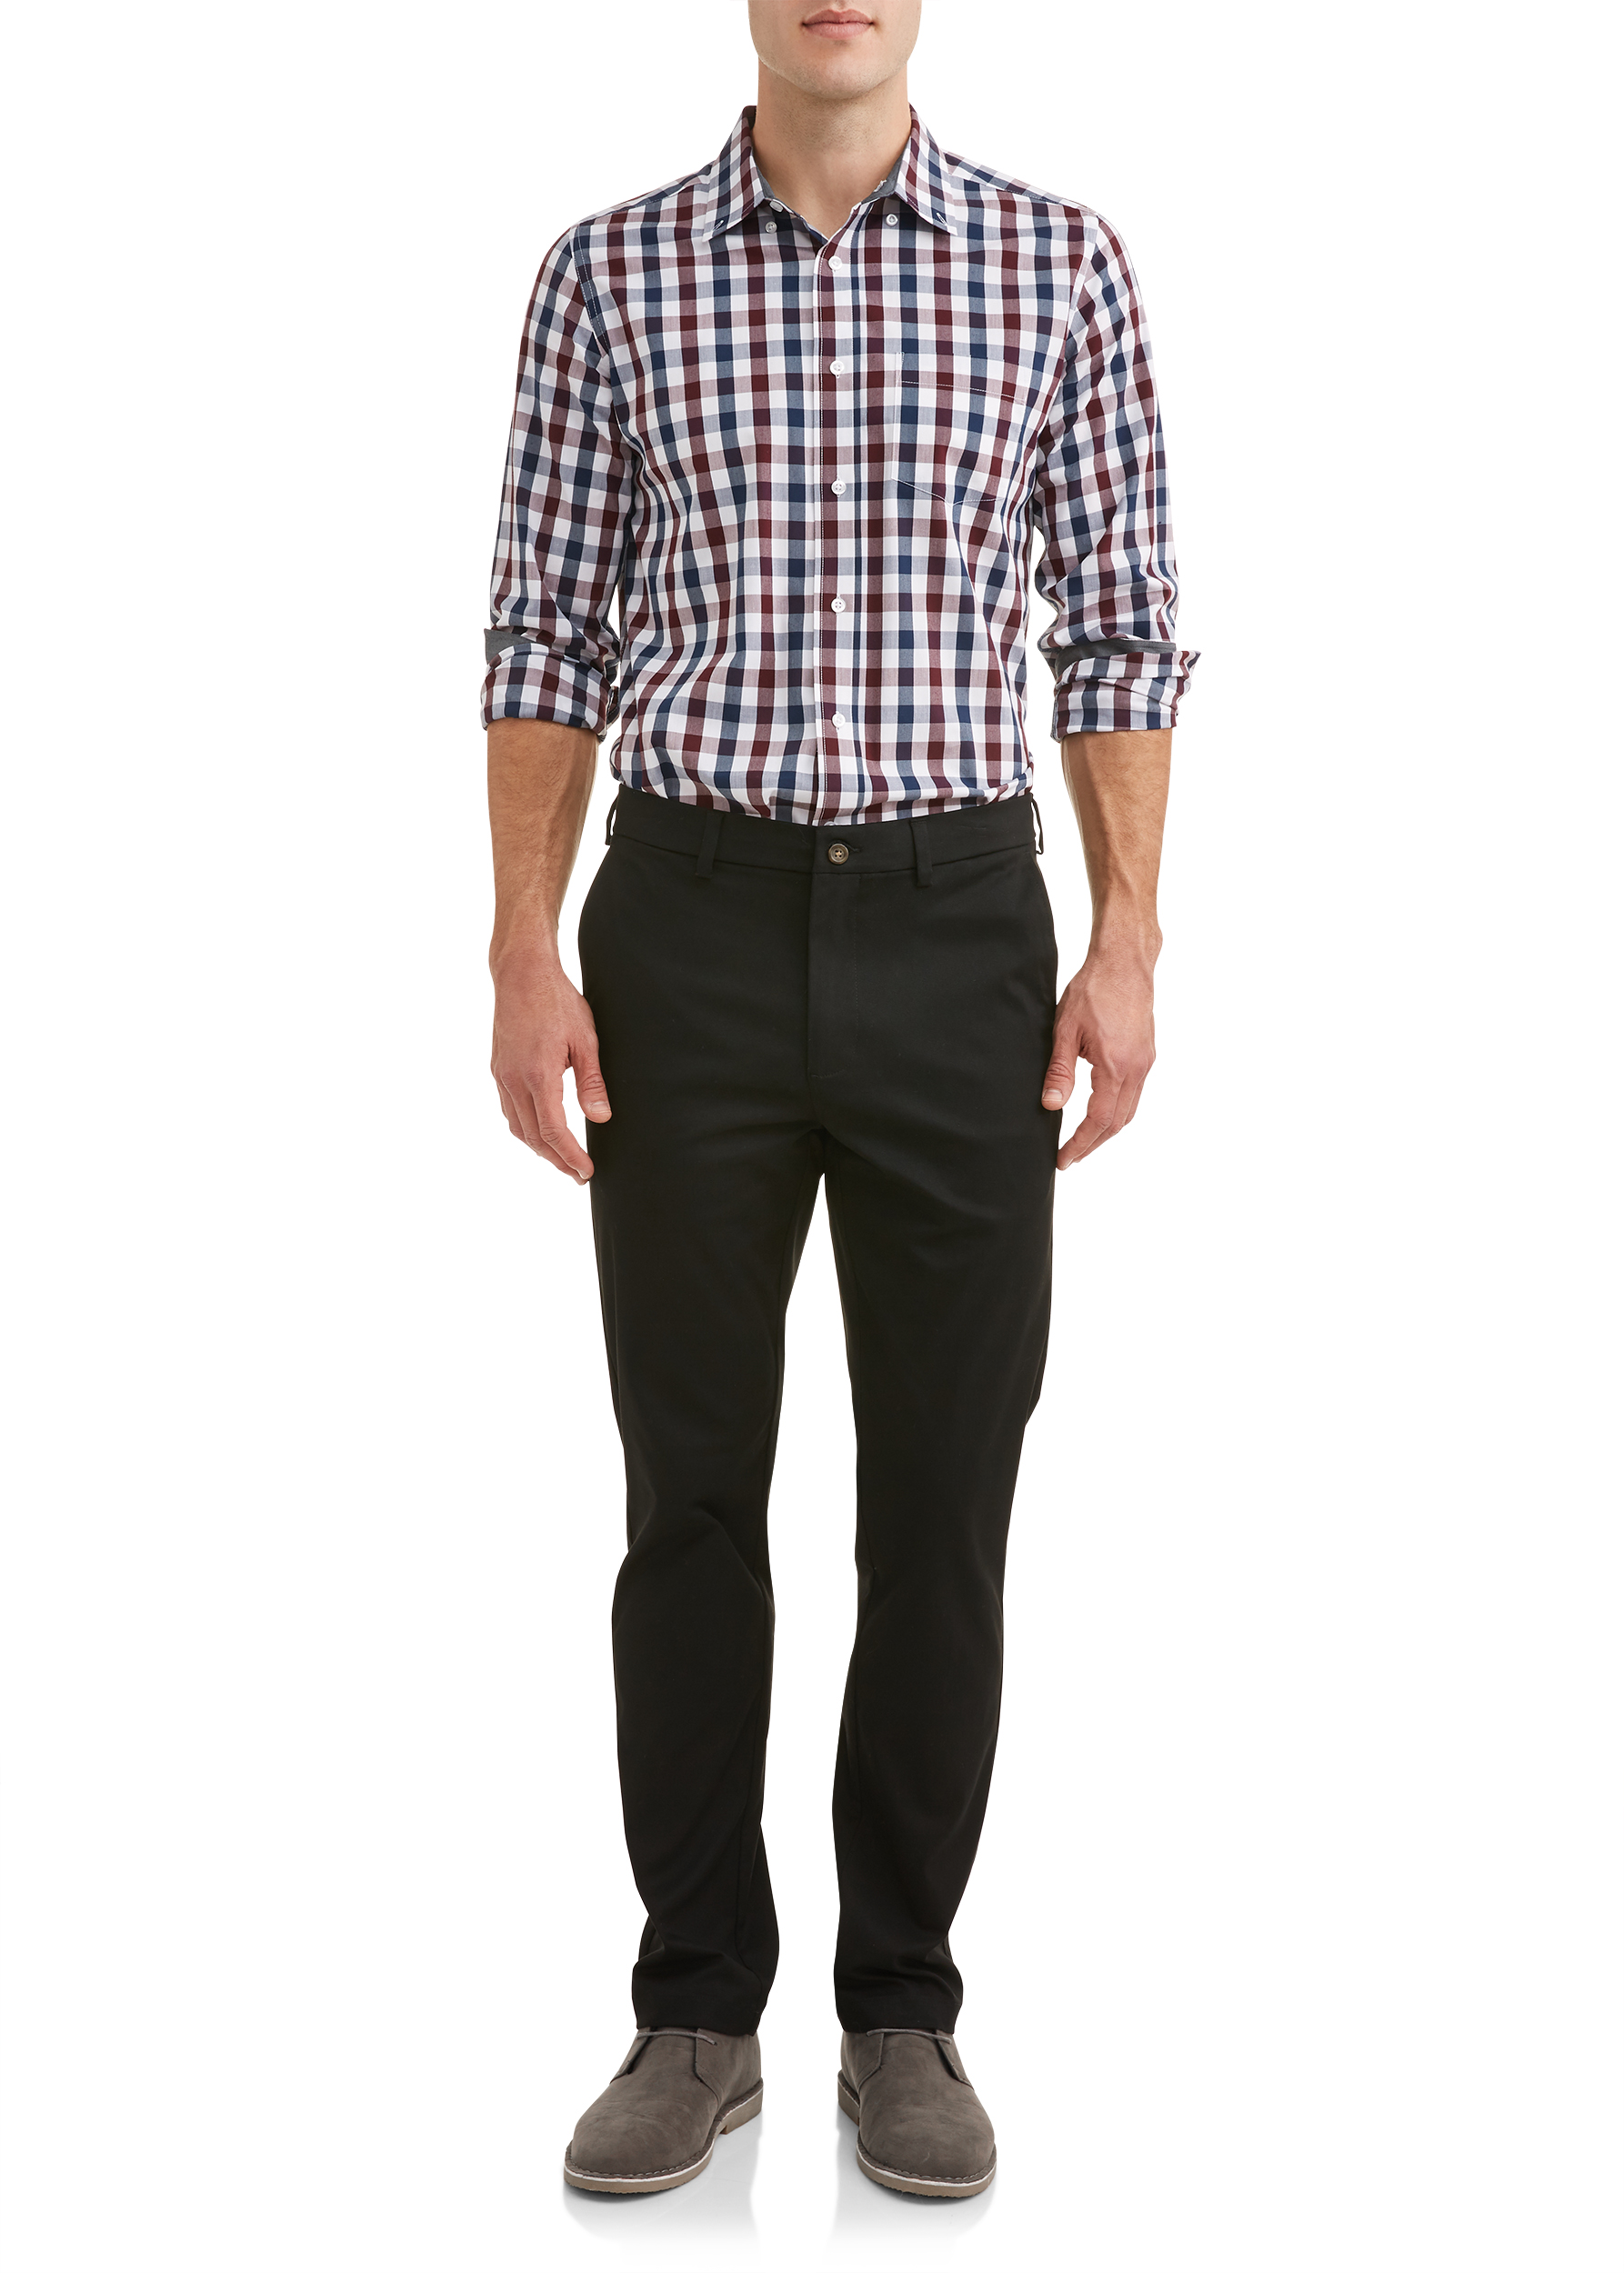 George Men's Premium Straight Fit Khaki Pants - image 3 of 6